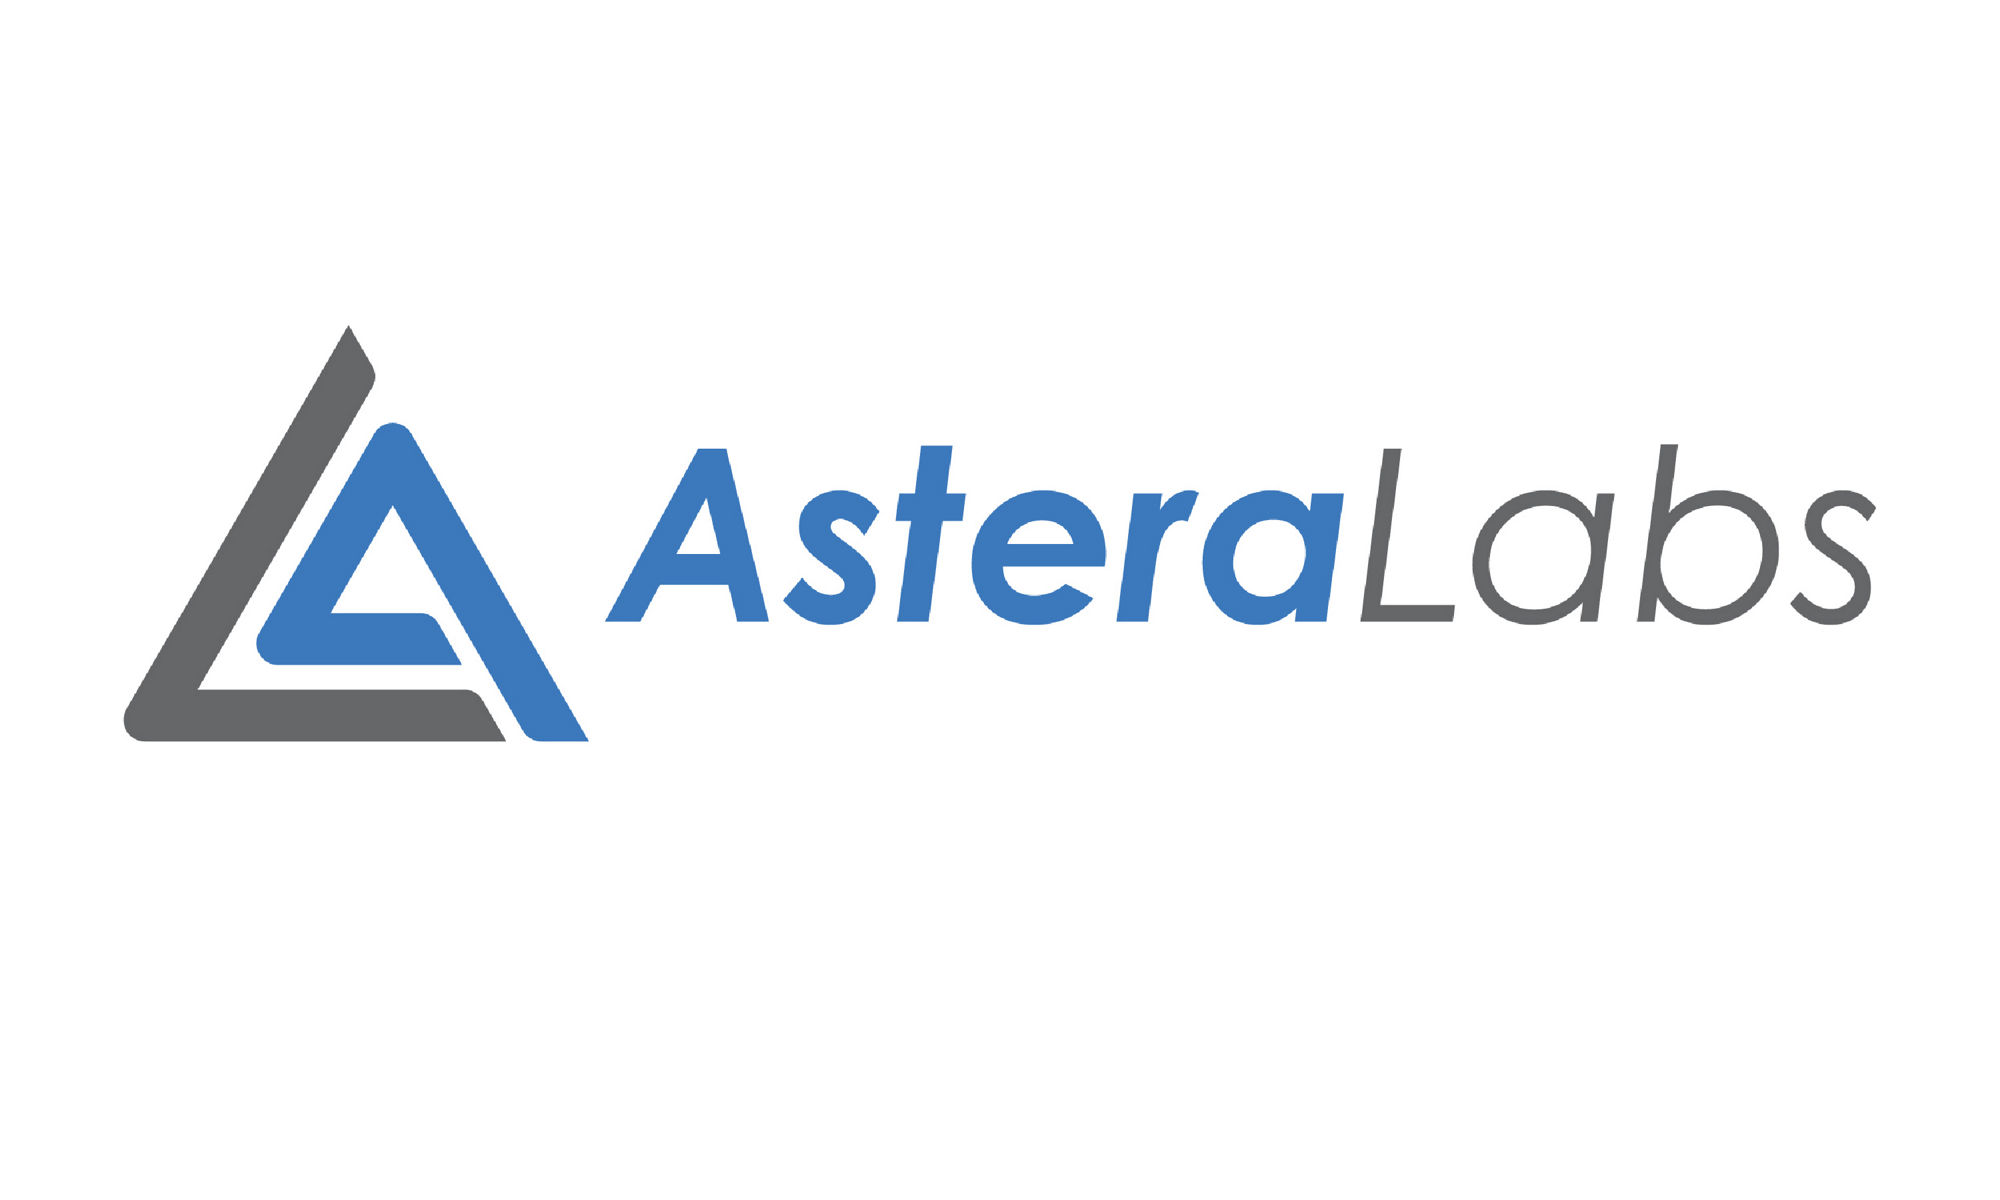 Astera labs 標誌